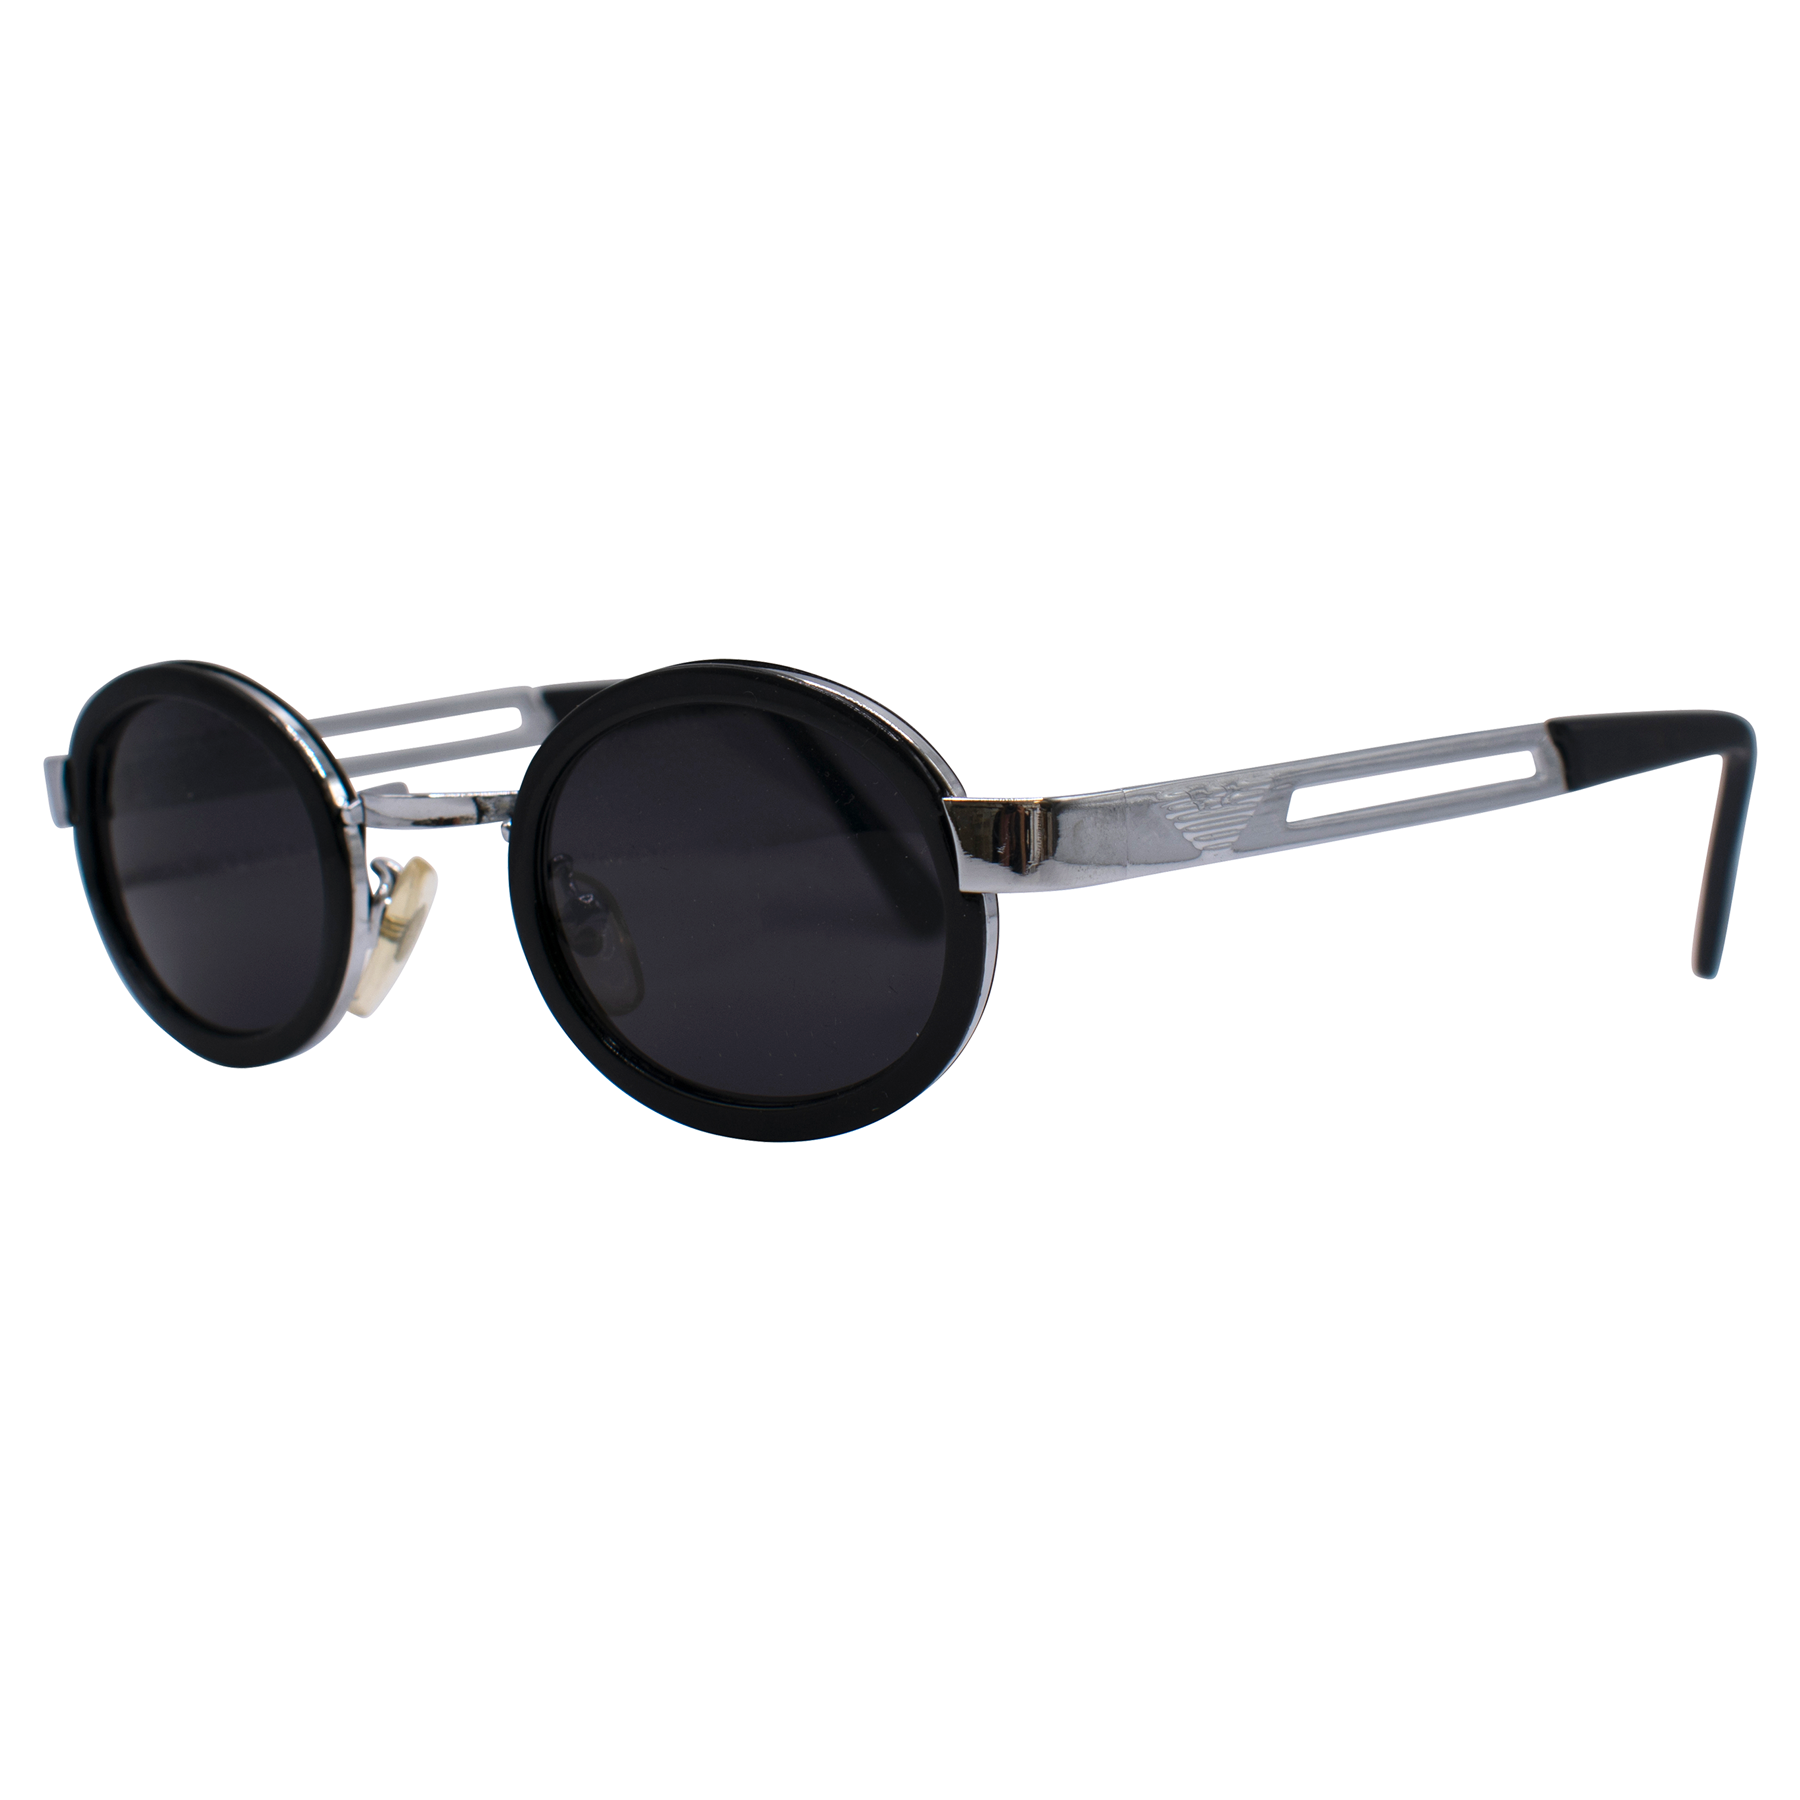 RICKY 90s Round Sunglasses